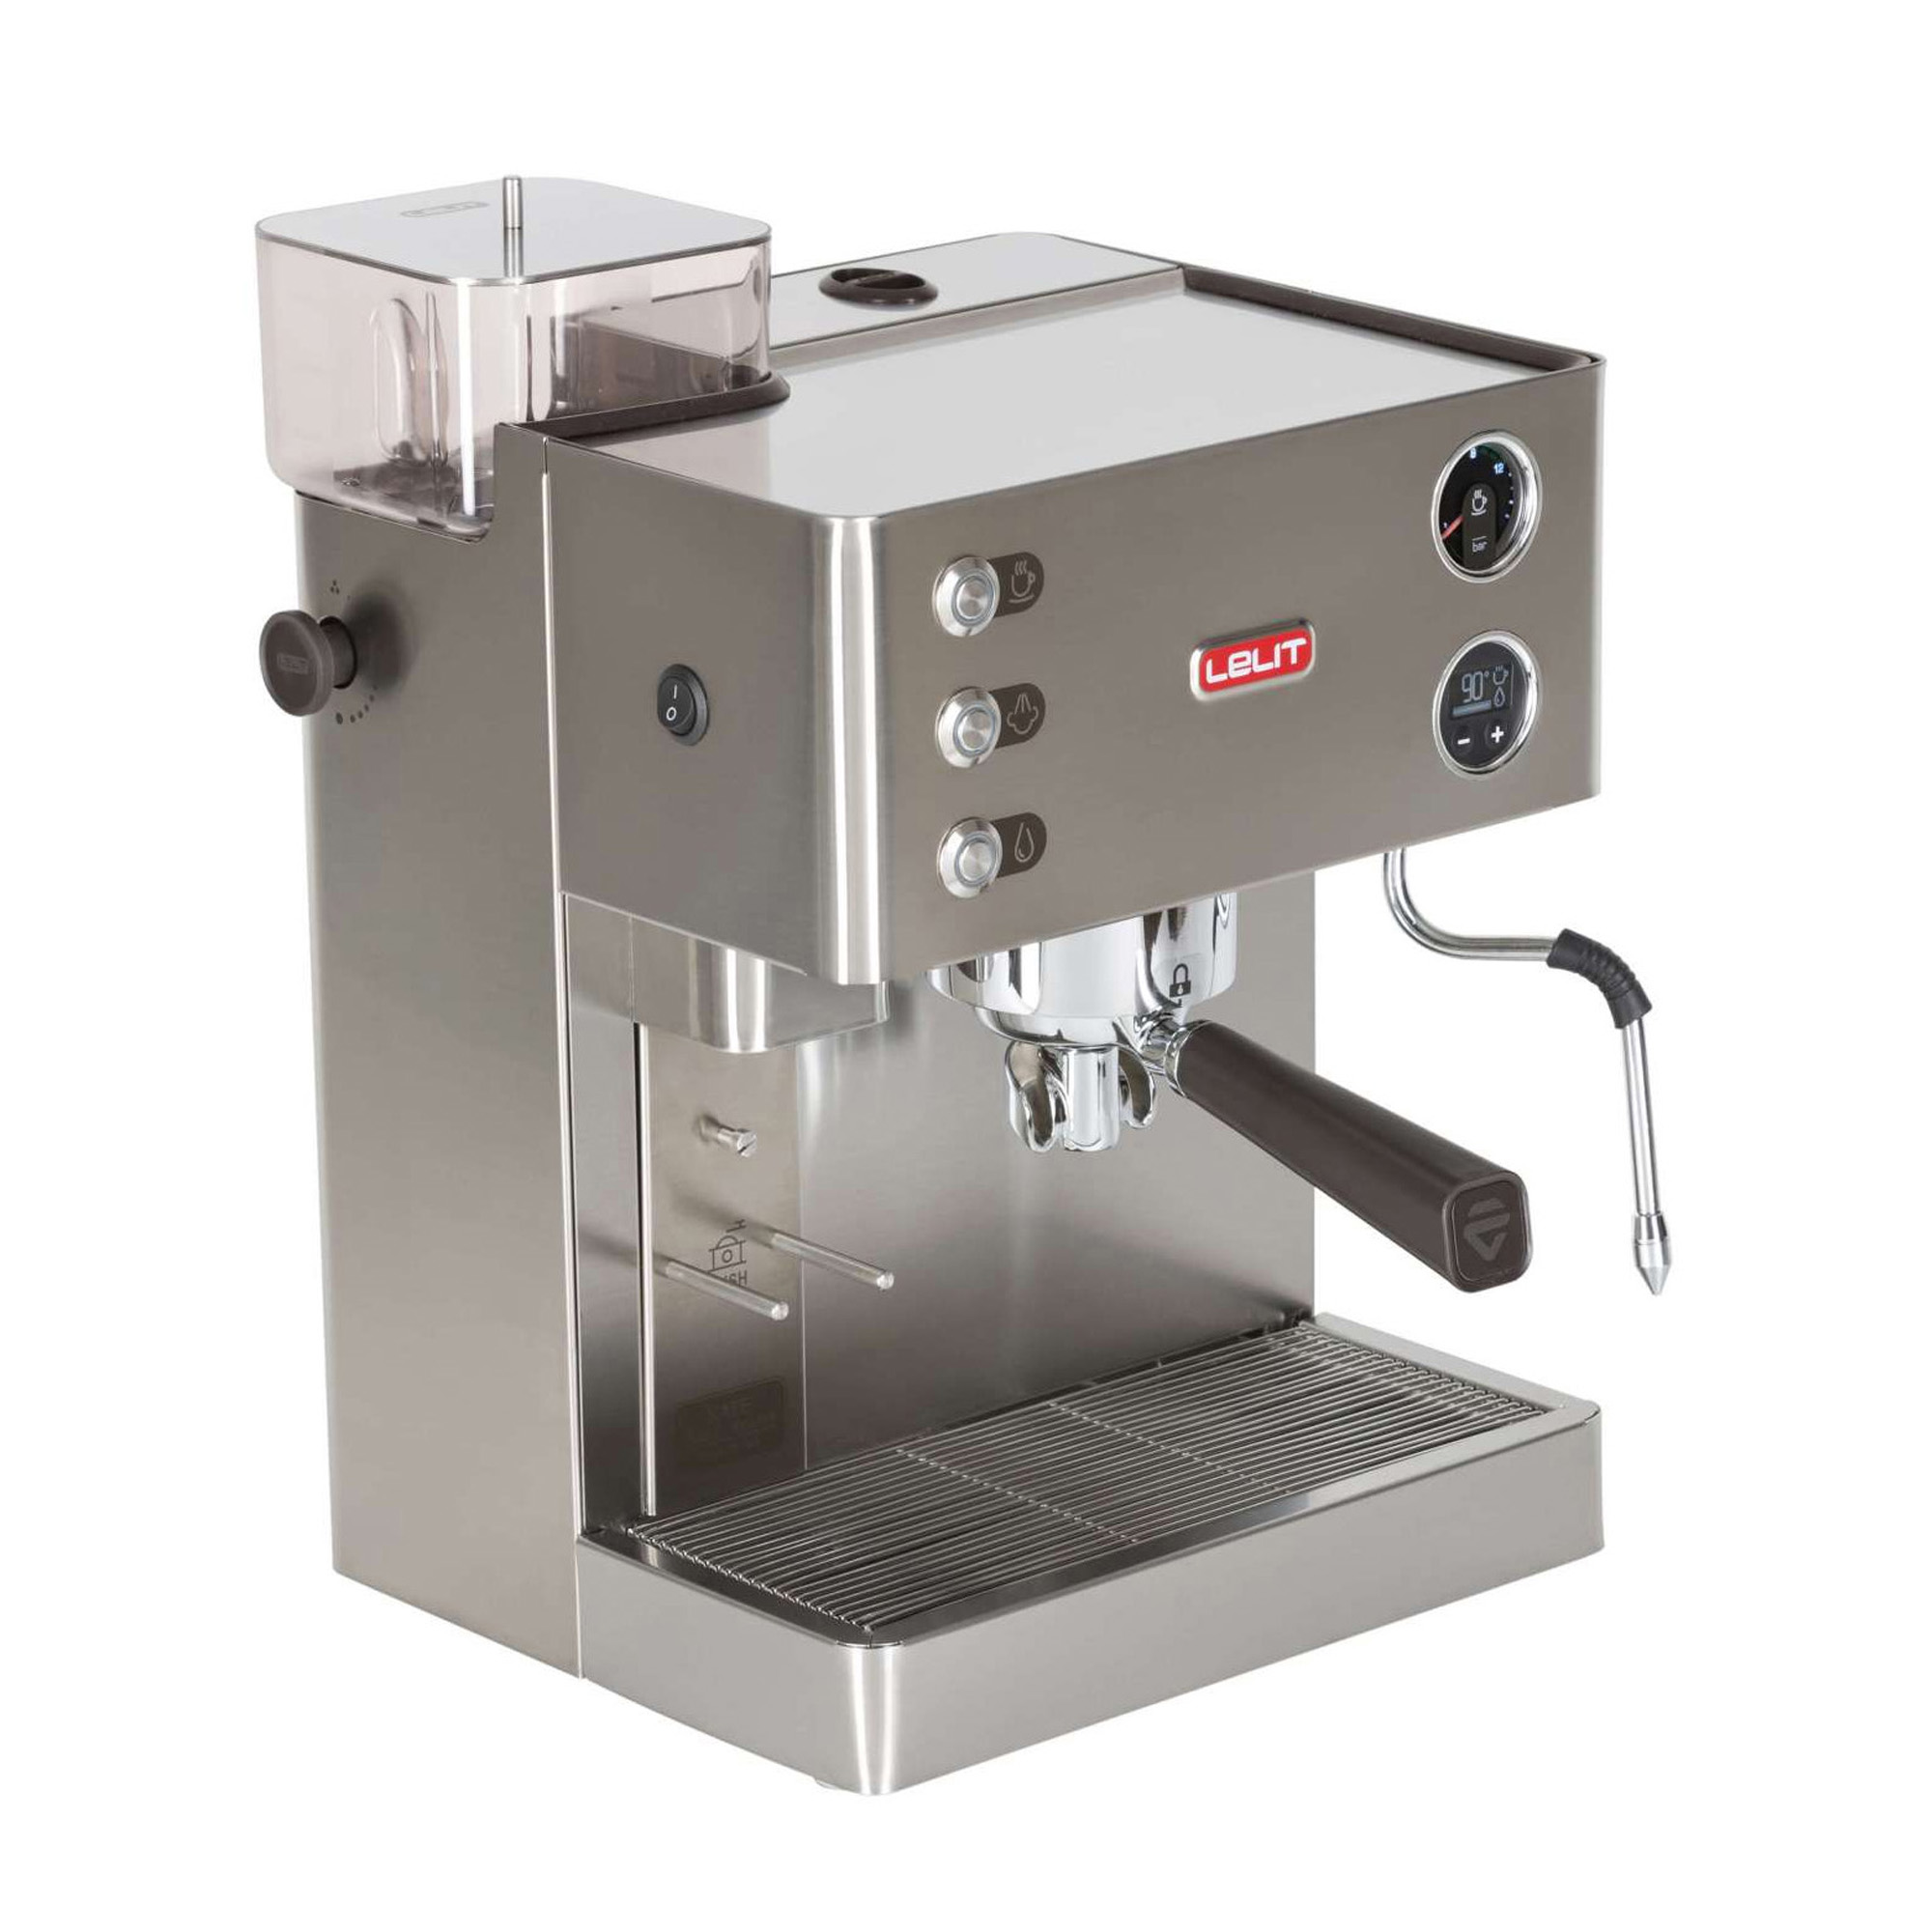 LELIT PL82 Edelstahl Espressomaschine T